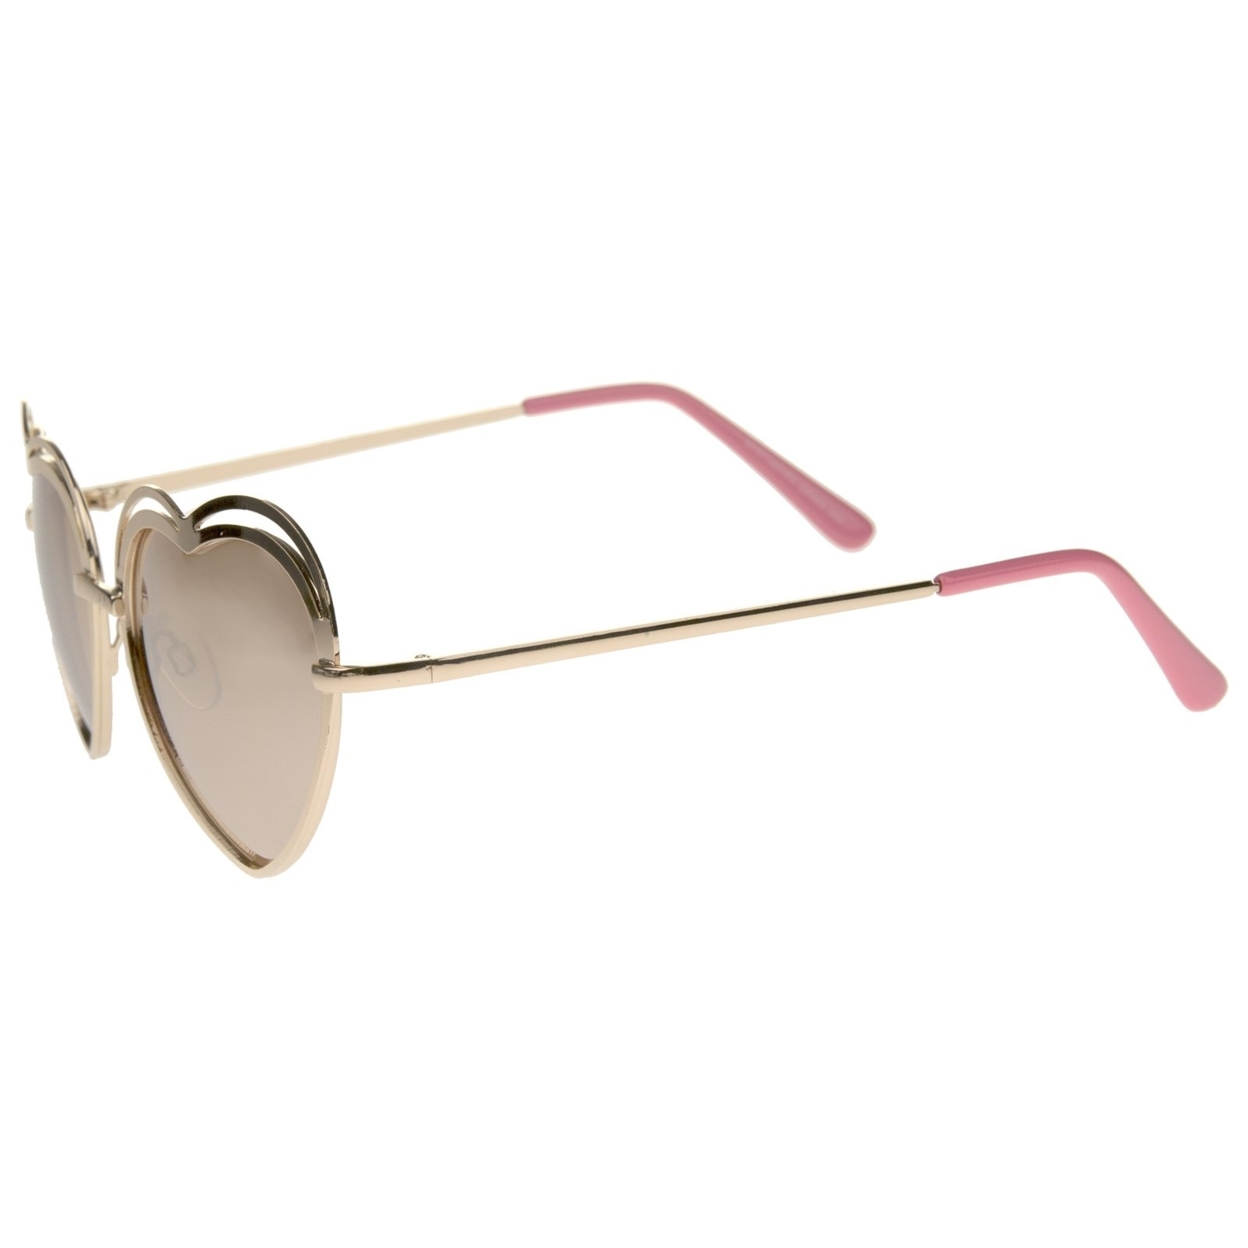 Women's Metal Cutout Frame Thin Temple Cutout Heart Sunglasses 55mm - Gold / Amber